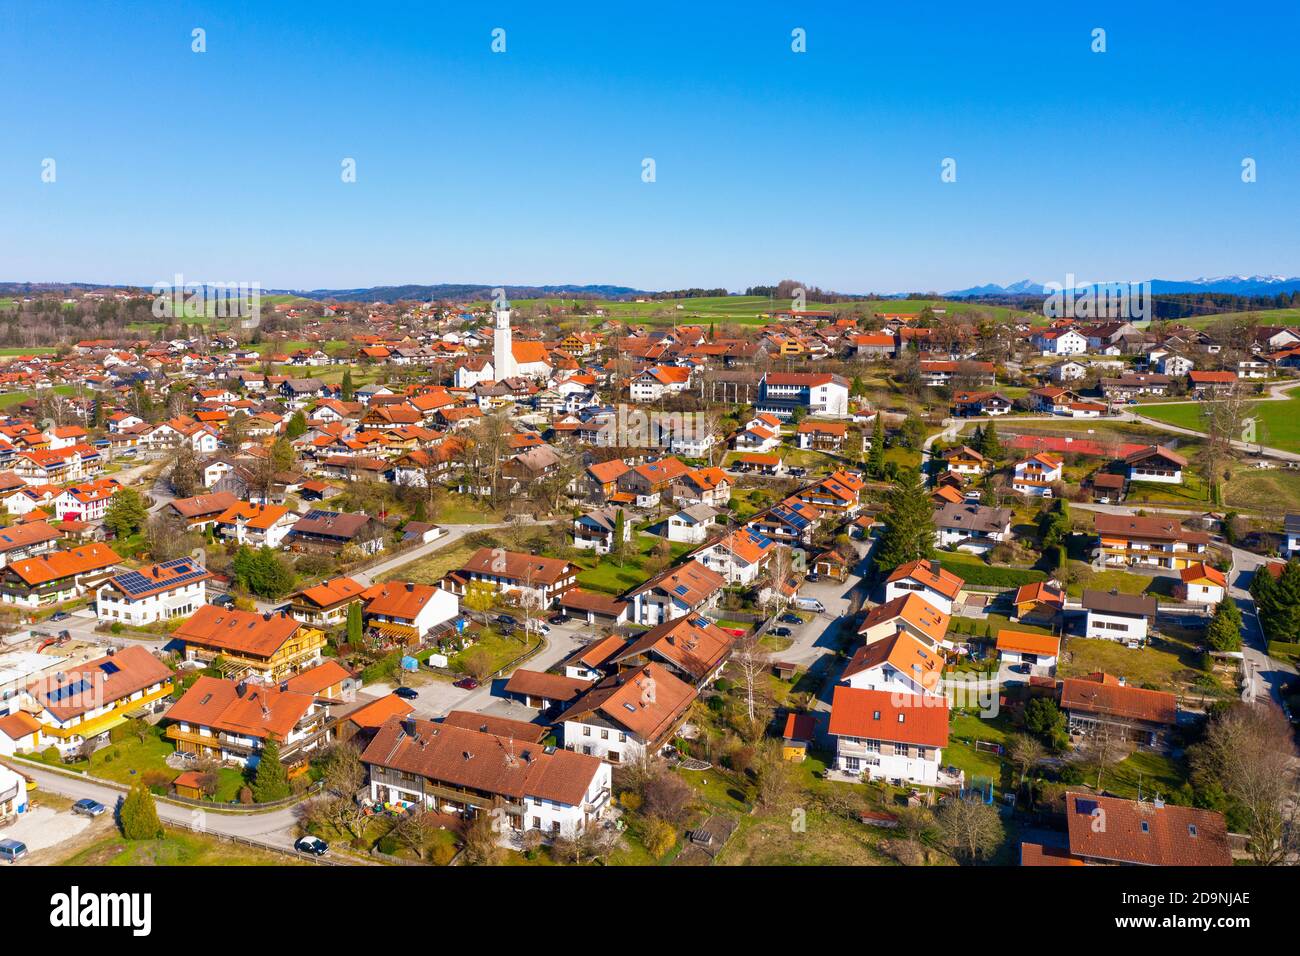 Königsdorf, Tölzer Land, drone image, Upper Bavaria, Bavaria, Germany Stock Photo